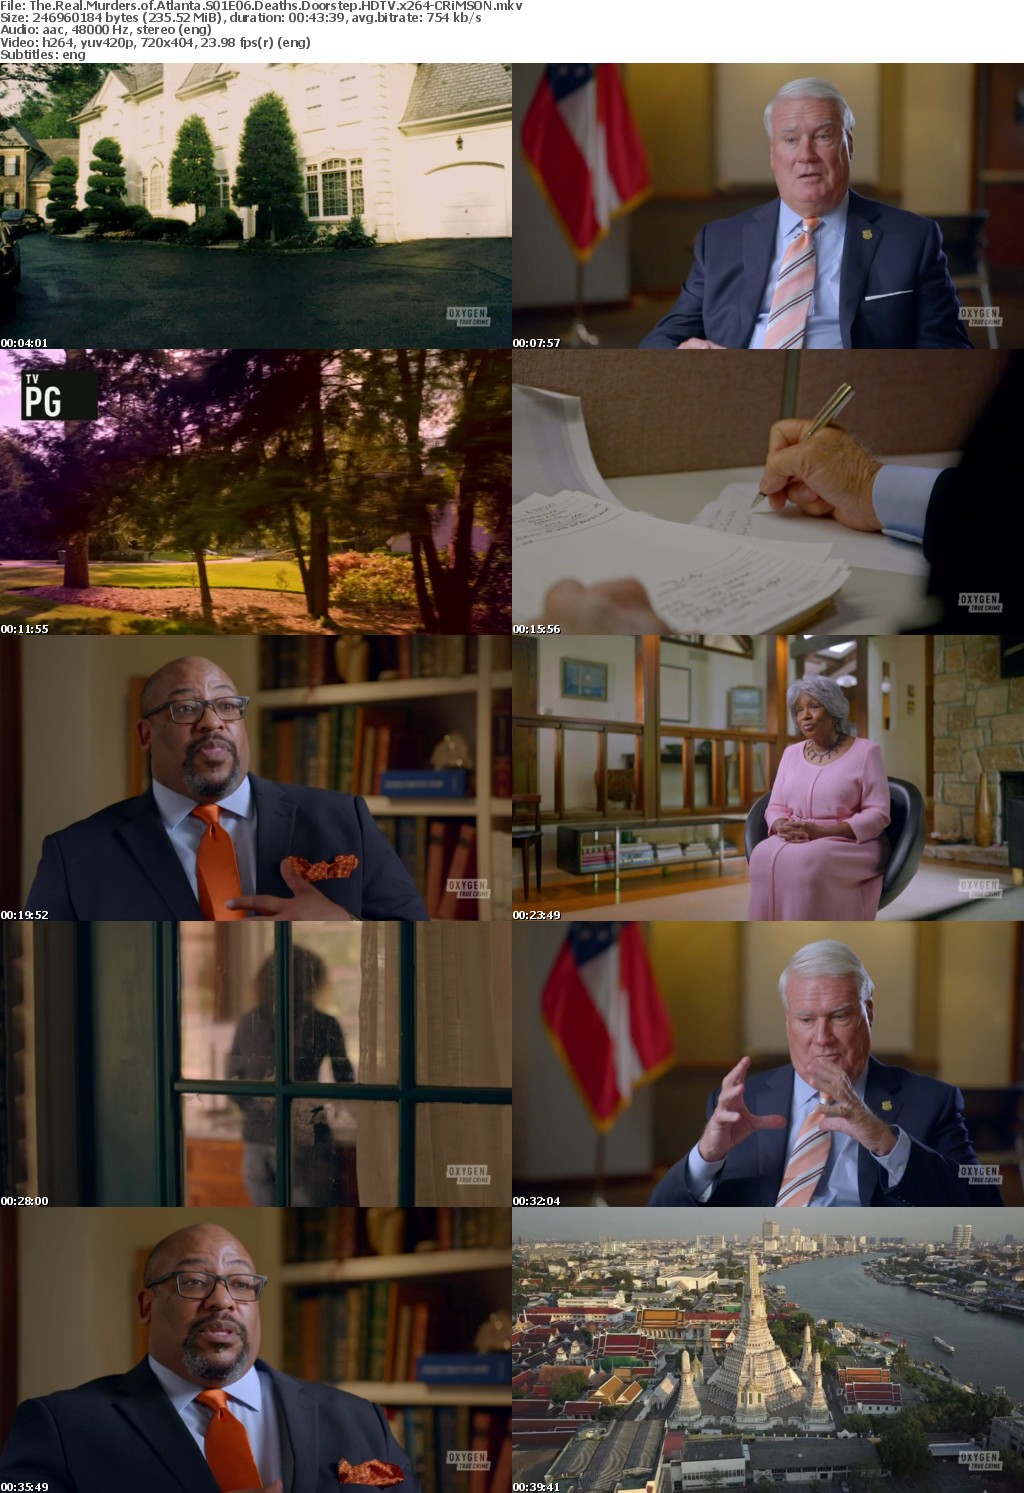 The Real Murders of Atlanta S01E06 Deaths Doorstep HDTV x264-CRiMSON